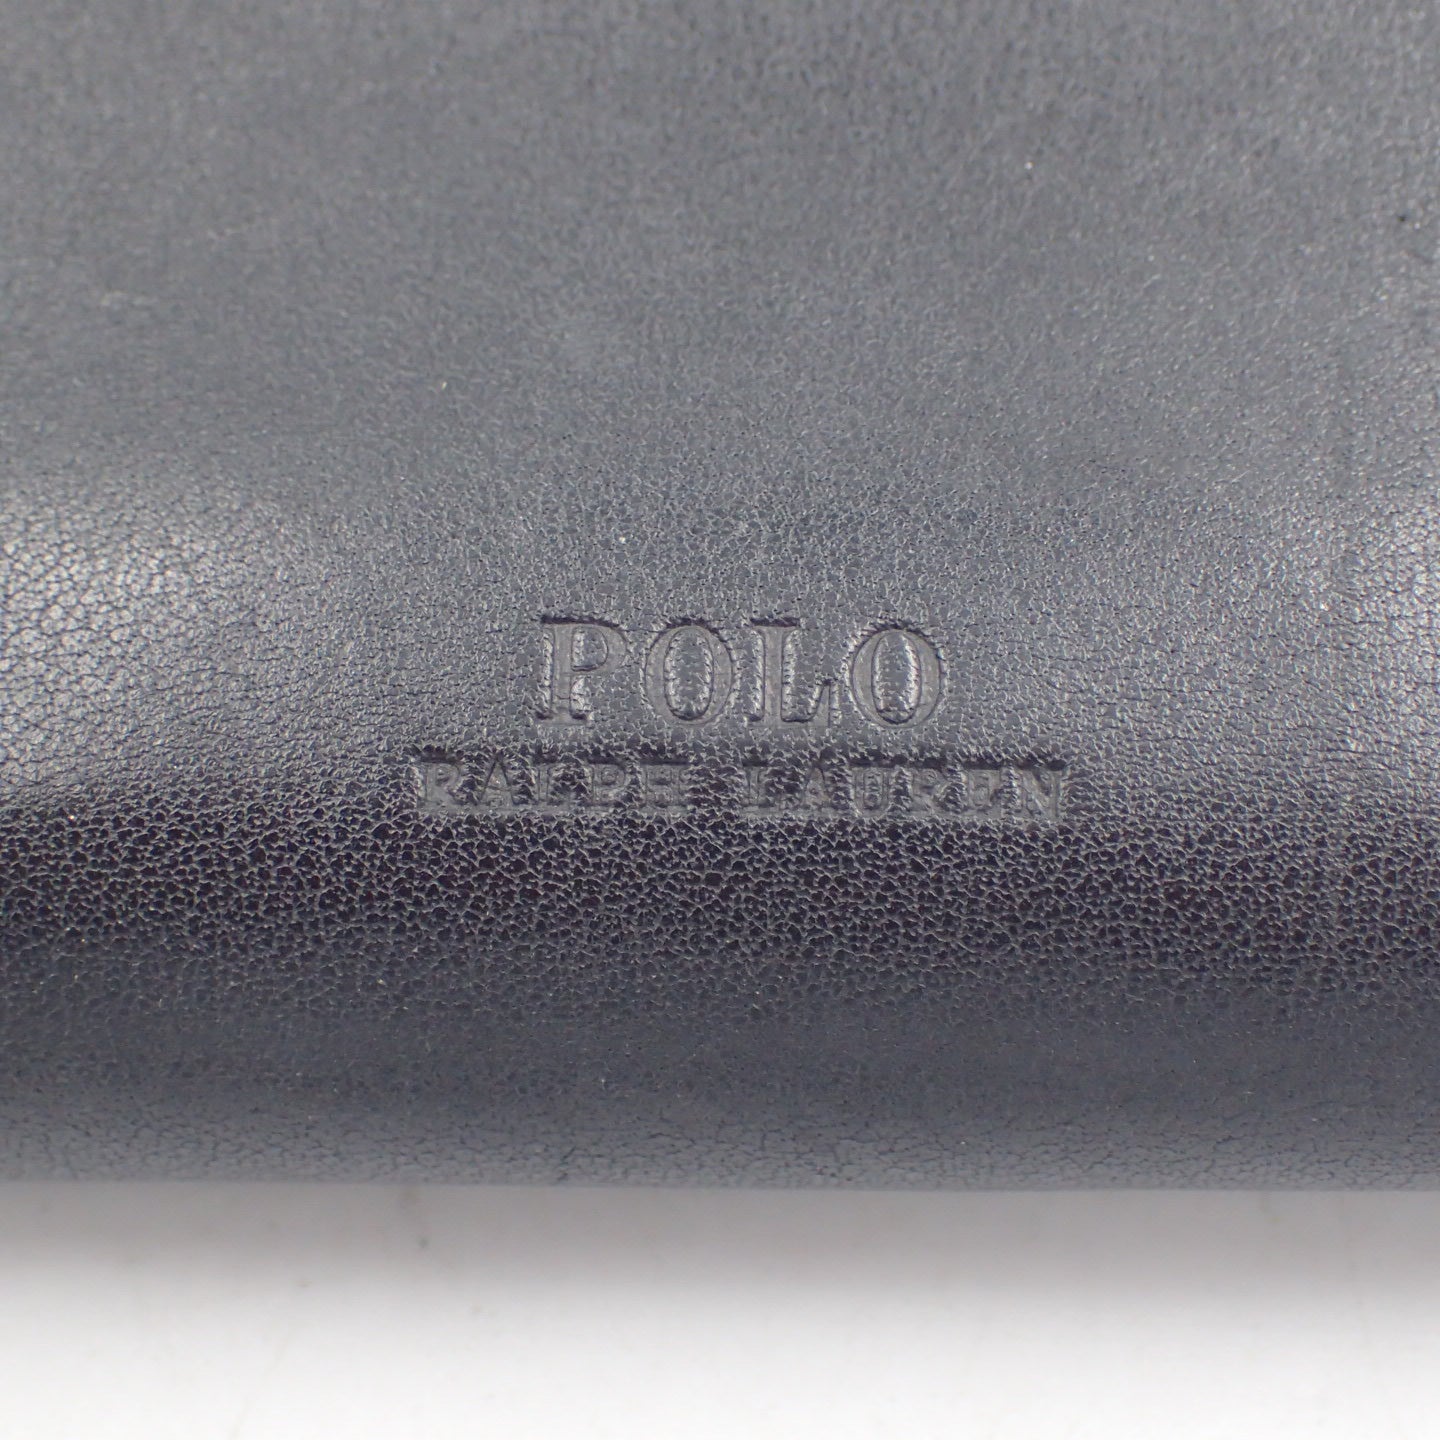 Polo Ralph Lauren 圆形拉链钱包 皮革编织 黑色 POLO RALPH LAUREN [AFI7] [二手] 